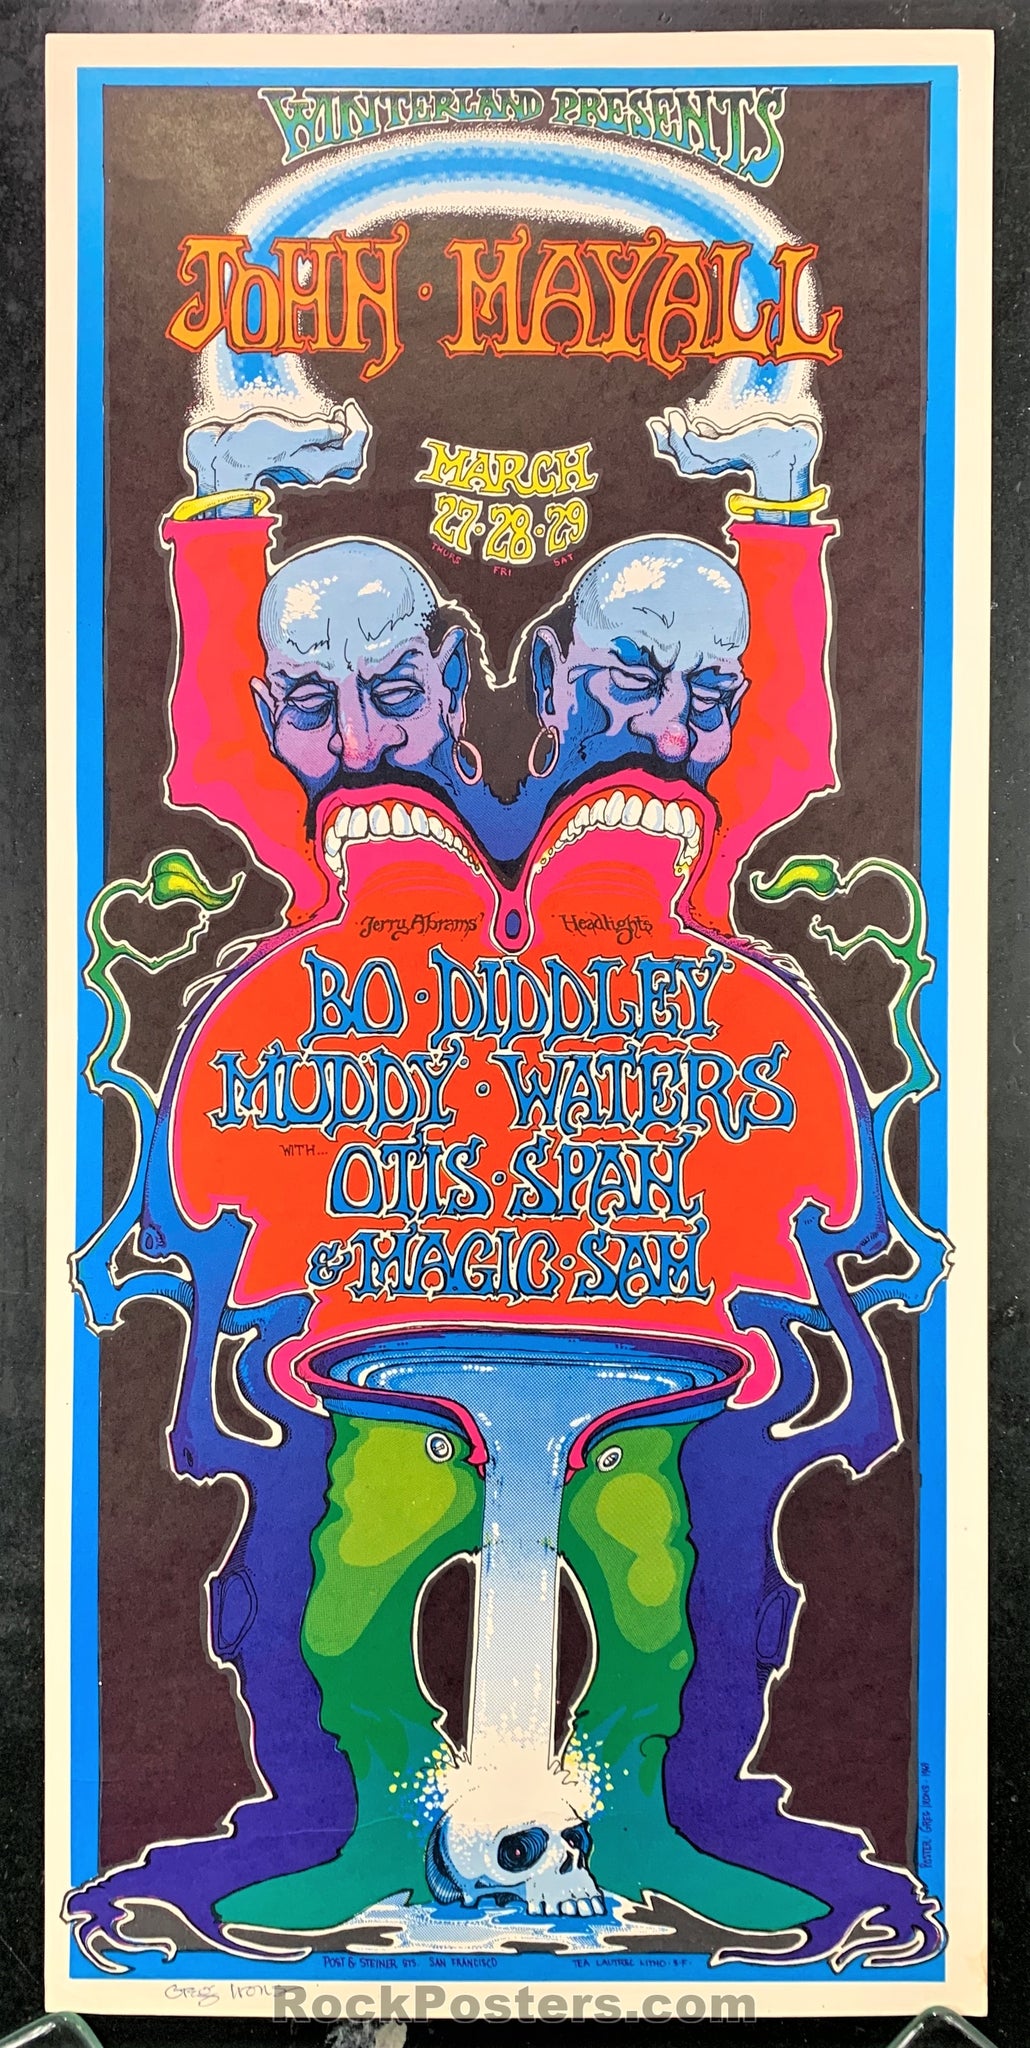 AUCTION - AOR 4.55 - John Mayall Muddy Waters - Greg Irons SIGNED - 1969 Poster  - Winterland  - Very Good